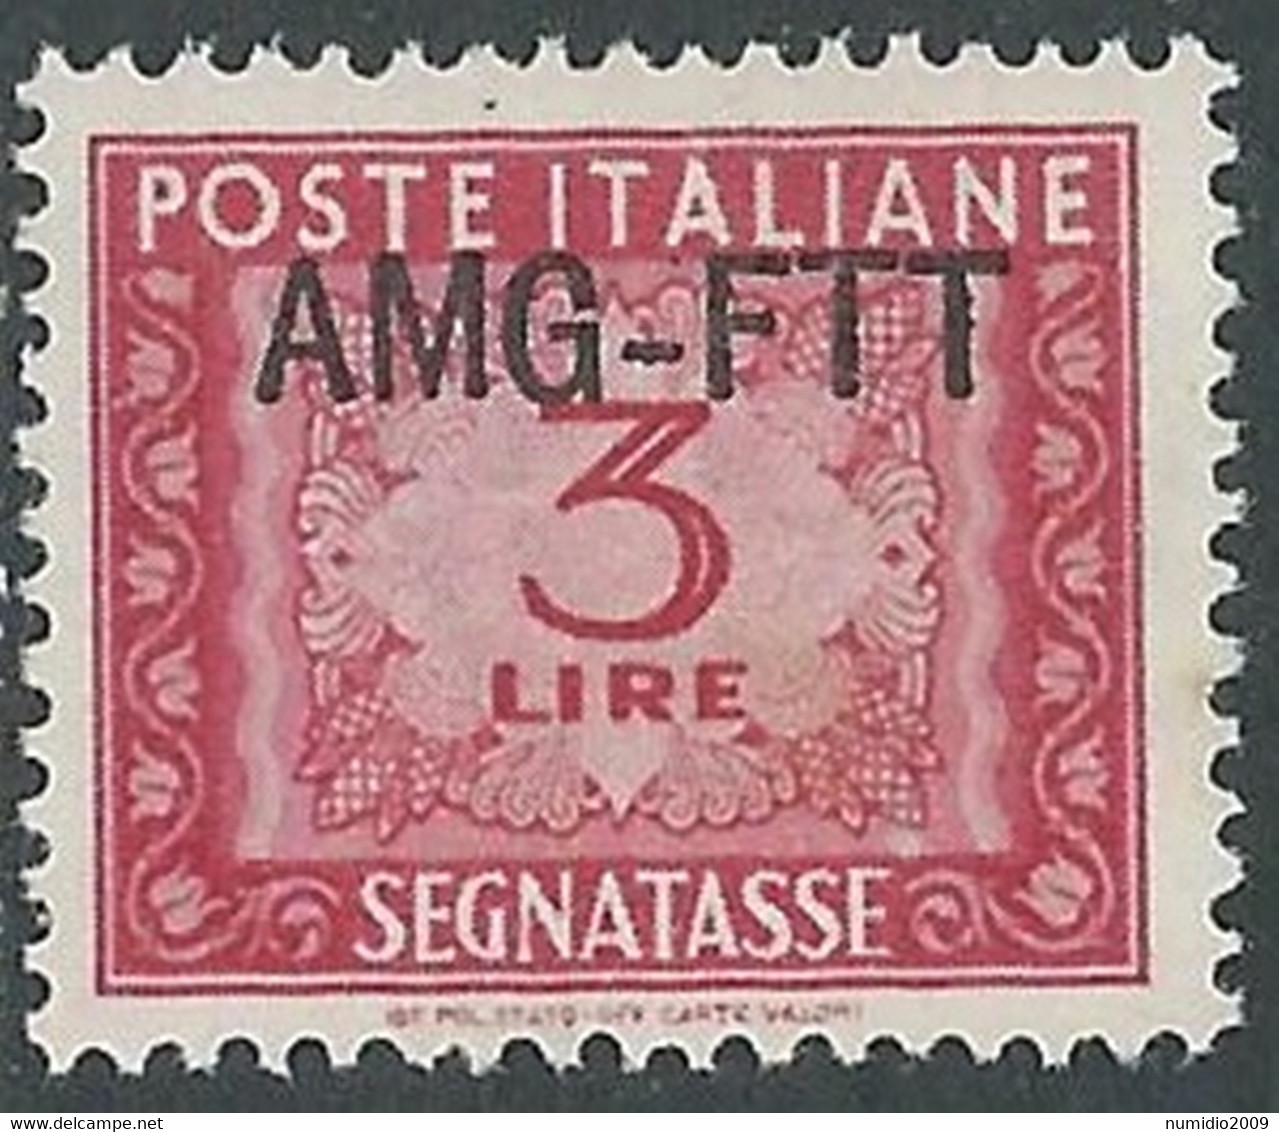 1949-54 TRIESTE A SEGNATASSE 3 LIRE MNH ** - RE10-7 - Postage Due